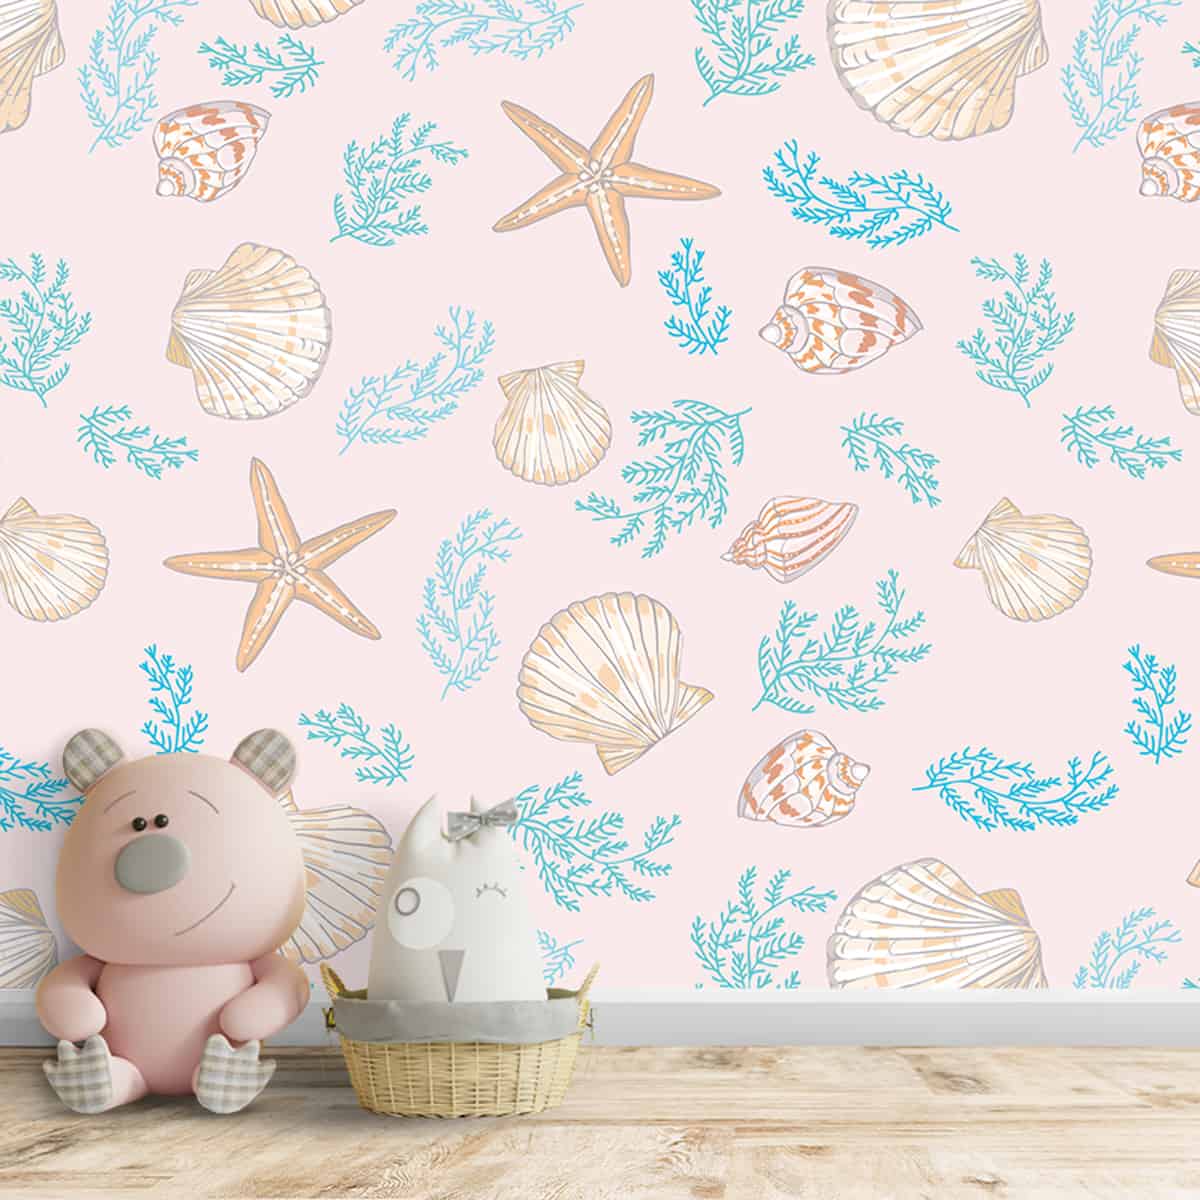 Aquatic Theme Wallpaper with Sea Shells and Starfish